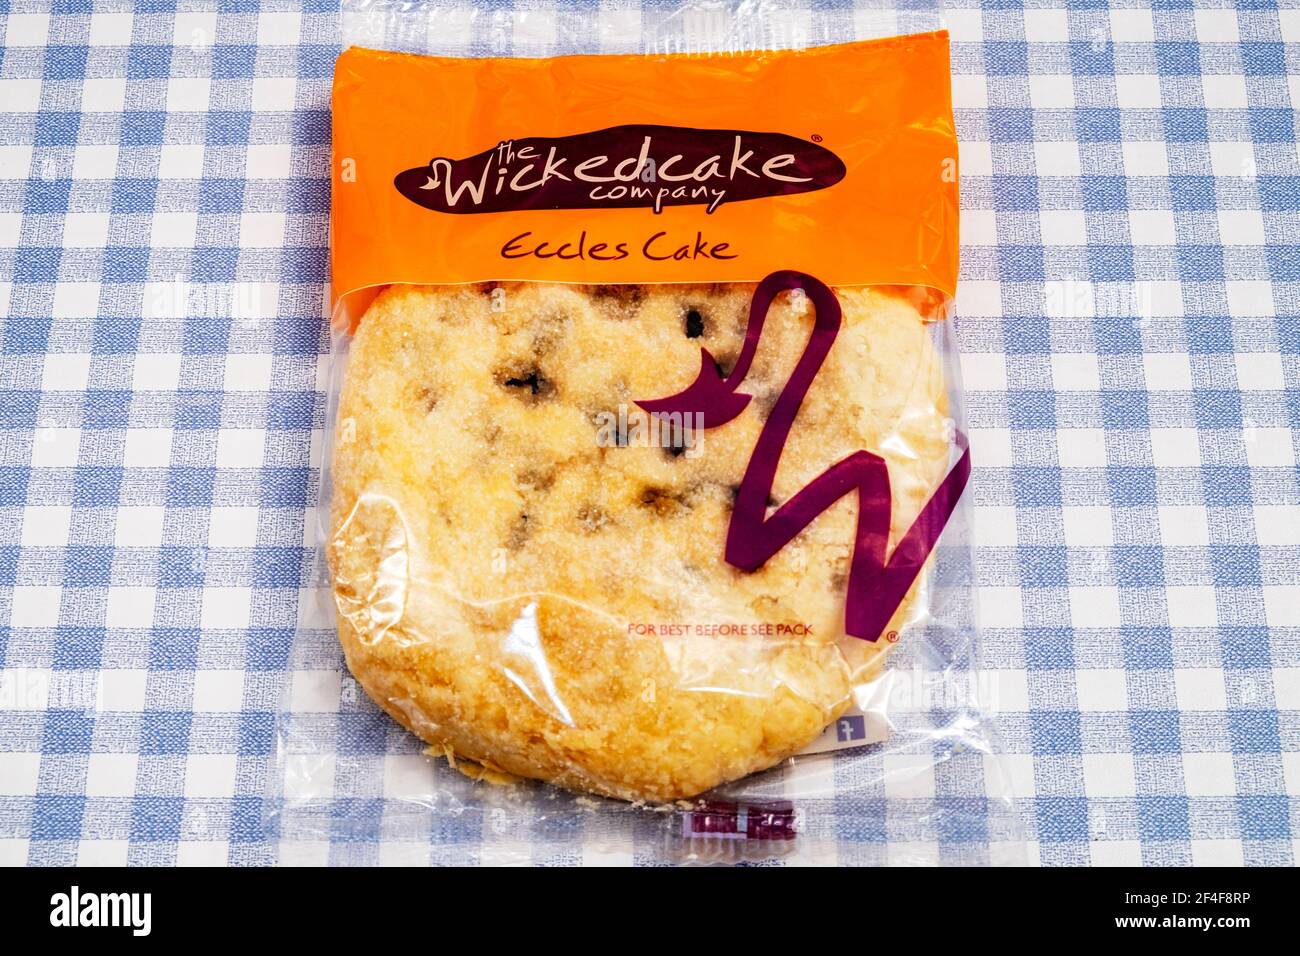 The Wicked Cake Company Eccles cake Stock Photo